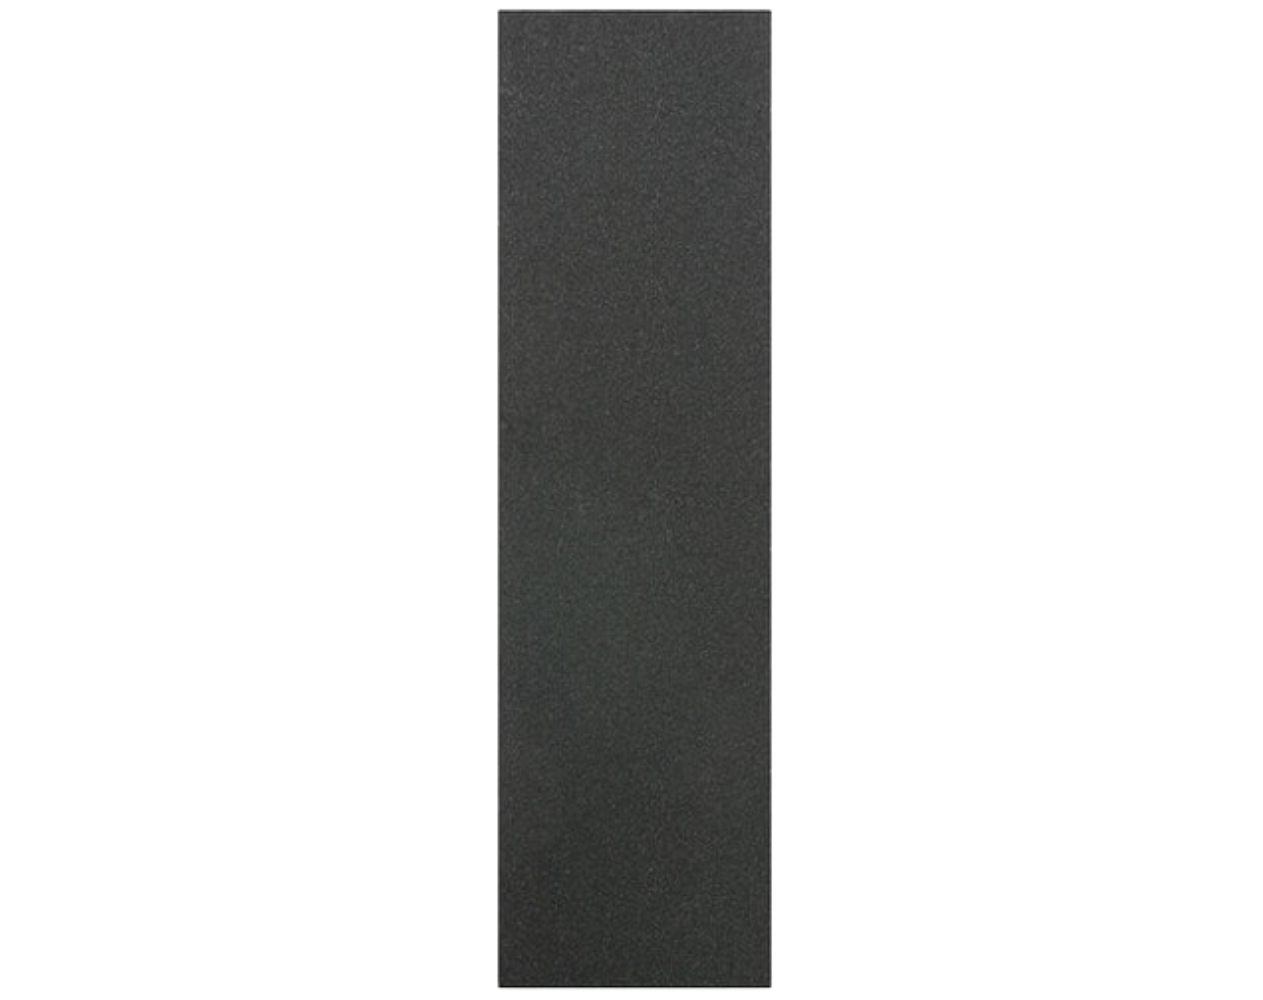 Fruity Griptape (11 x 35) Black Perforated Single Sheet